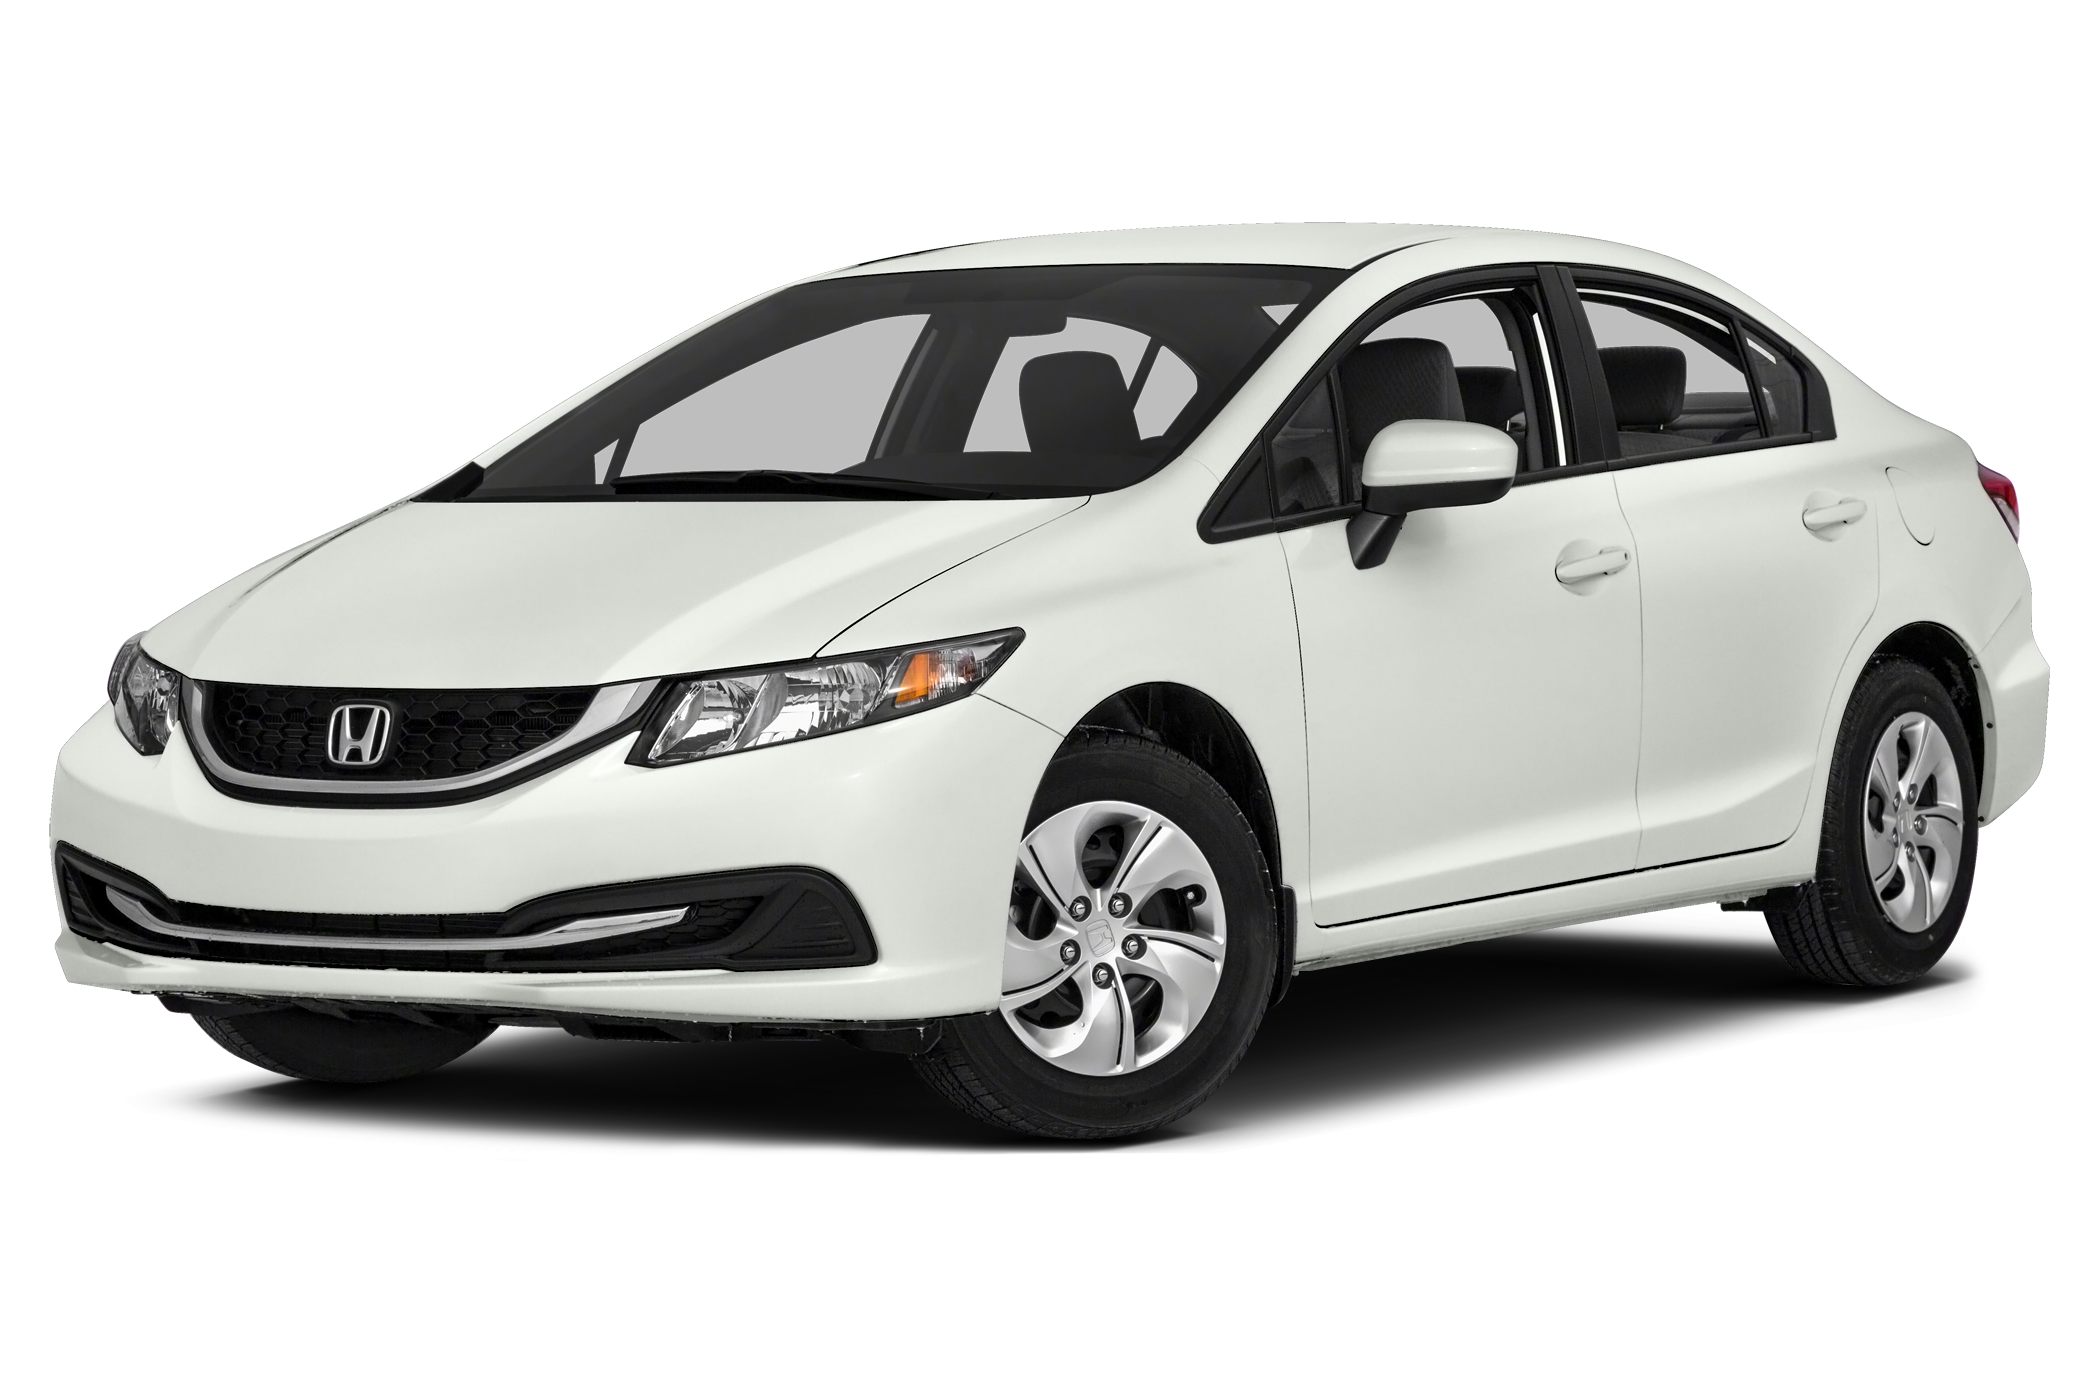 2014 Honda Civic Specs And Prices